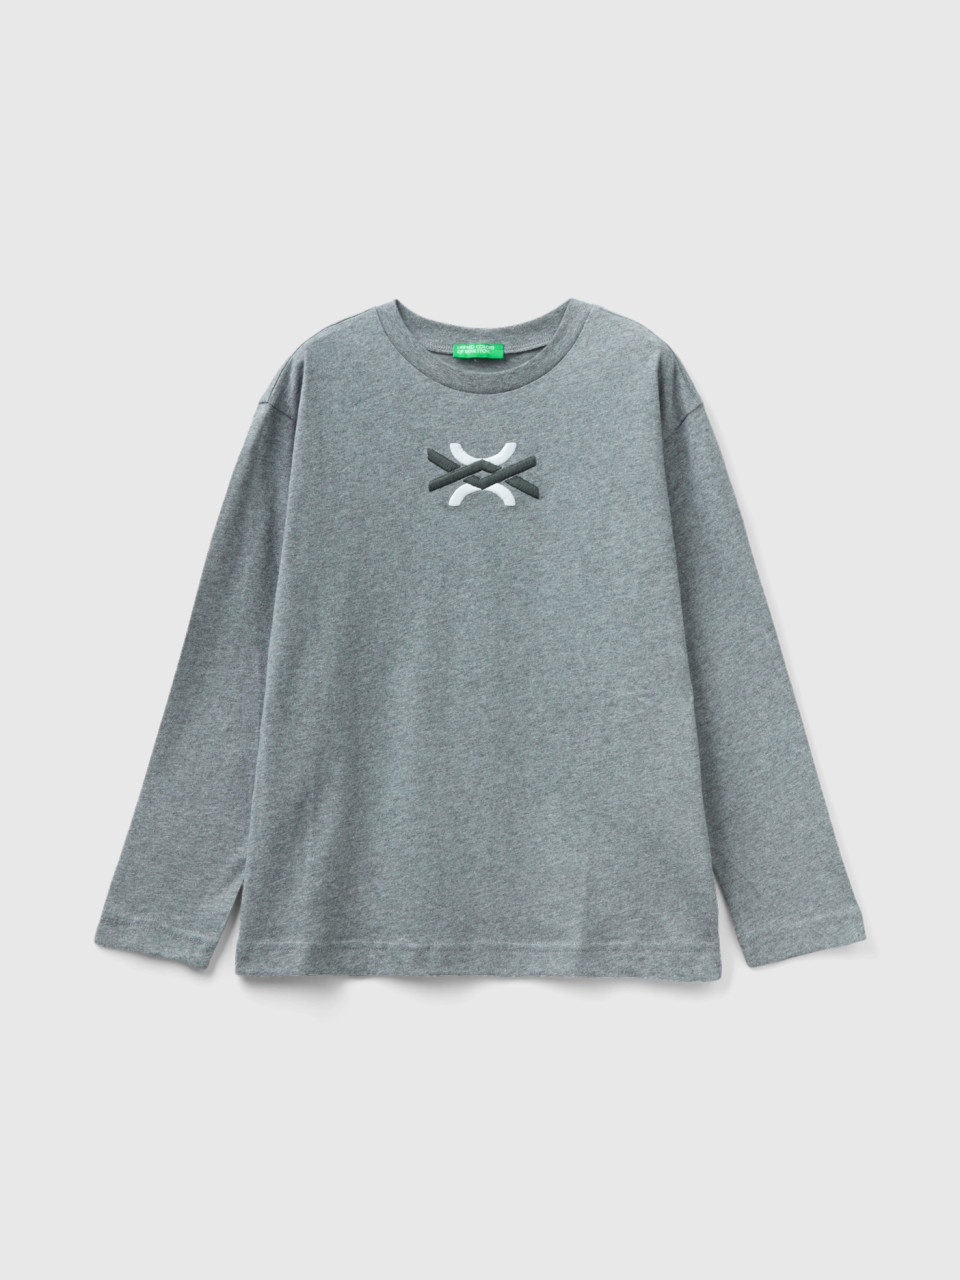 Benetton, Warm 100% Organic Cotton T-shirt, Dark Gray, Kids